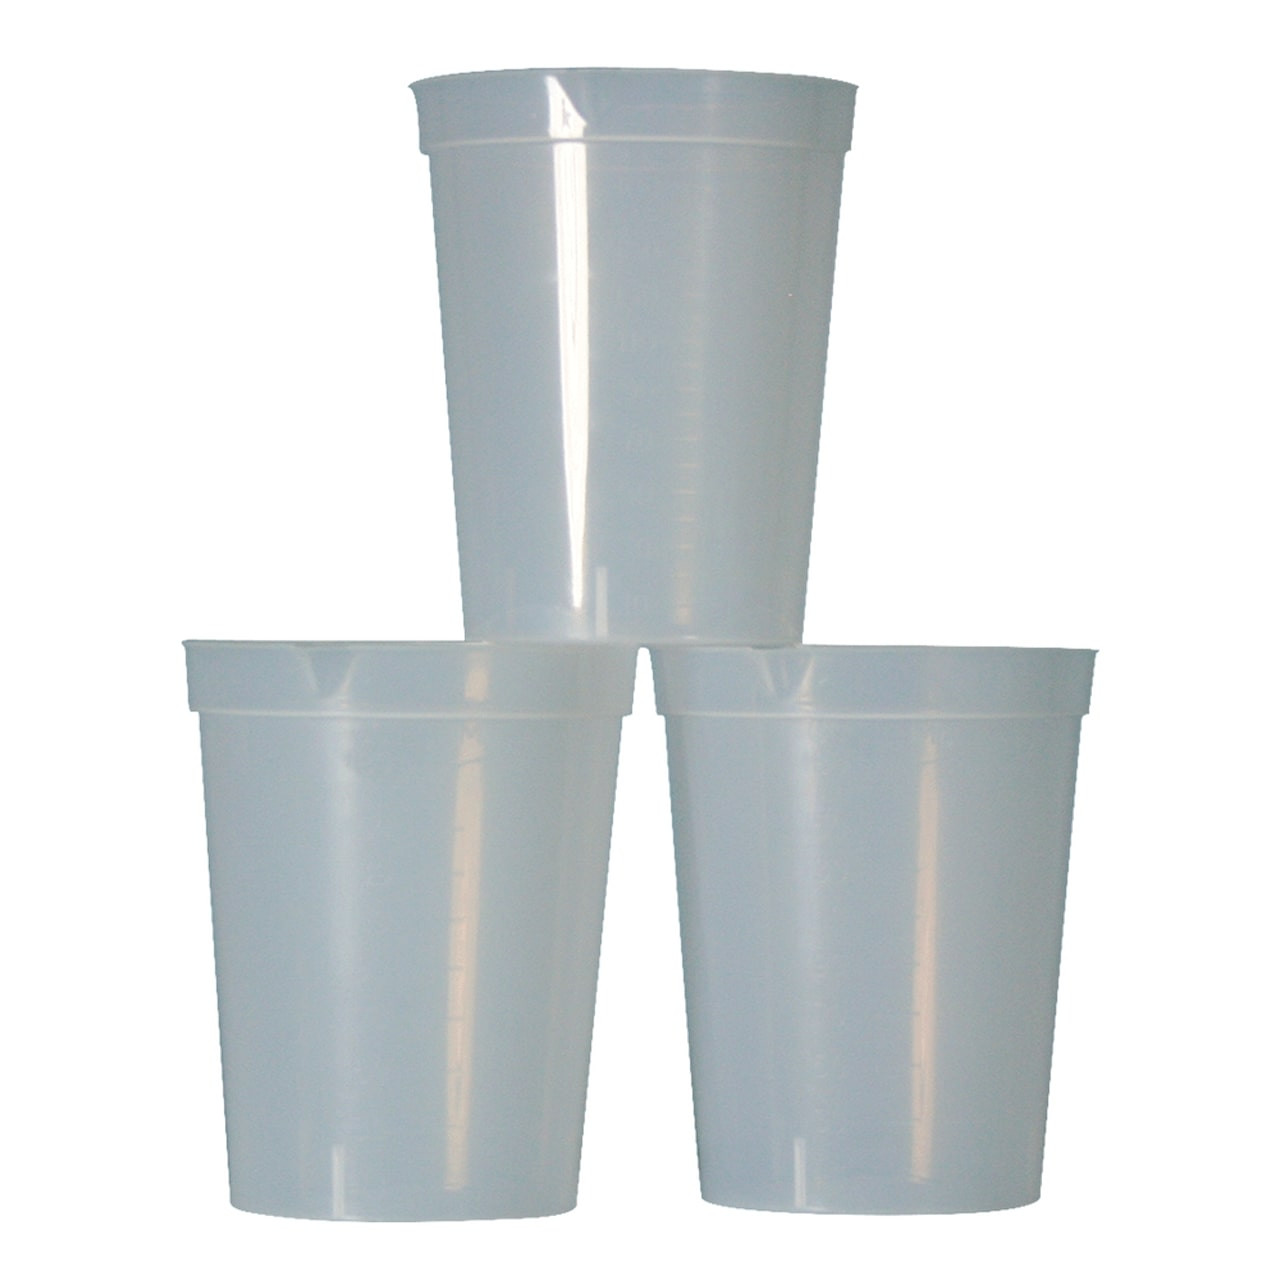 Measuring Cup (6 ounce) - Alumilite